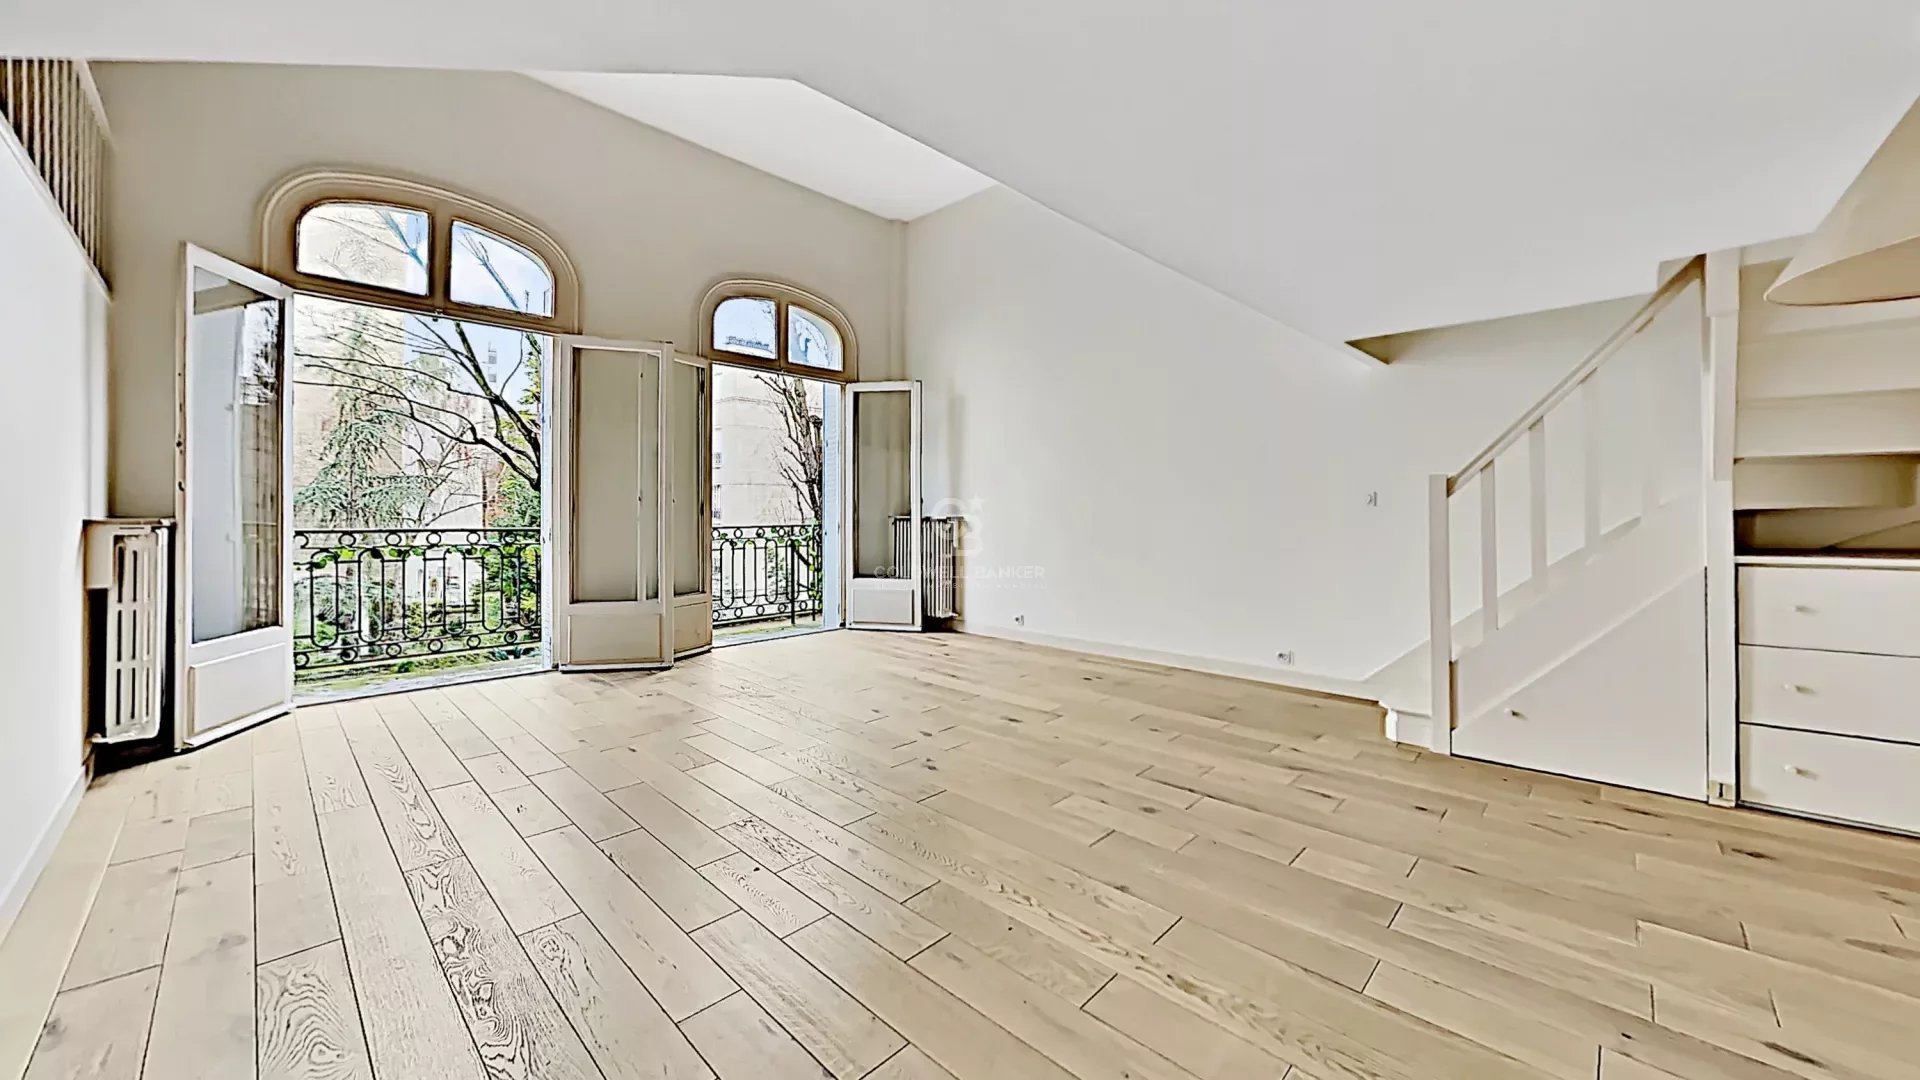 Appartement a louer neuilly-sur-seine - 3 pièce(s) - 90.29 m2 - Surfyn